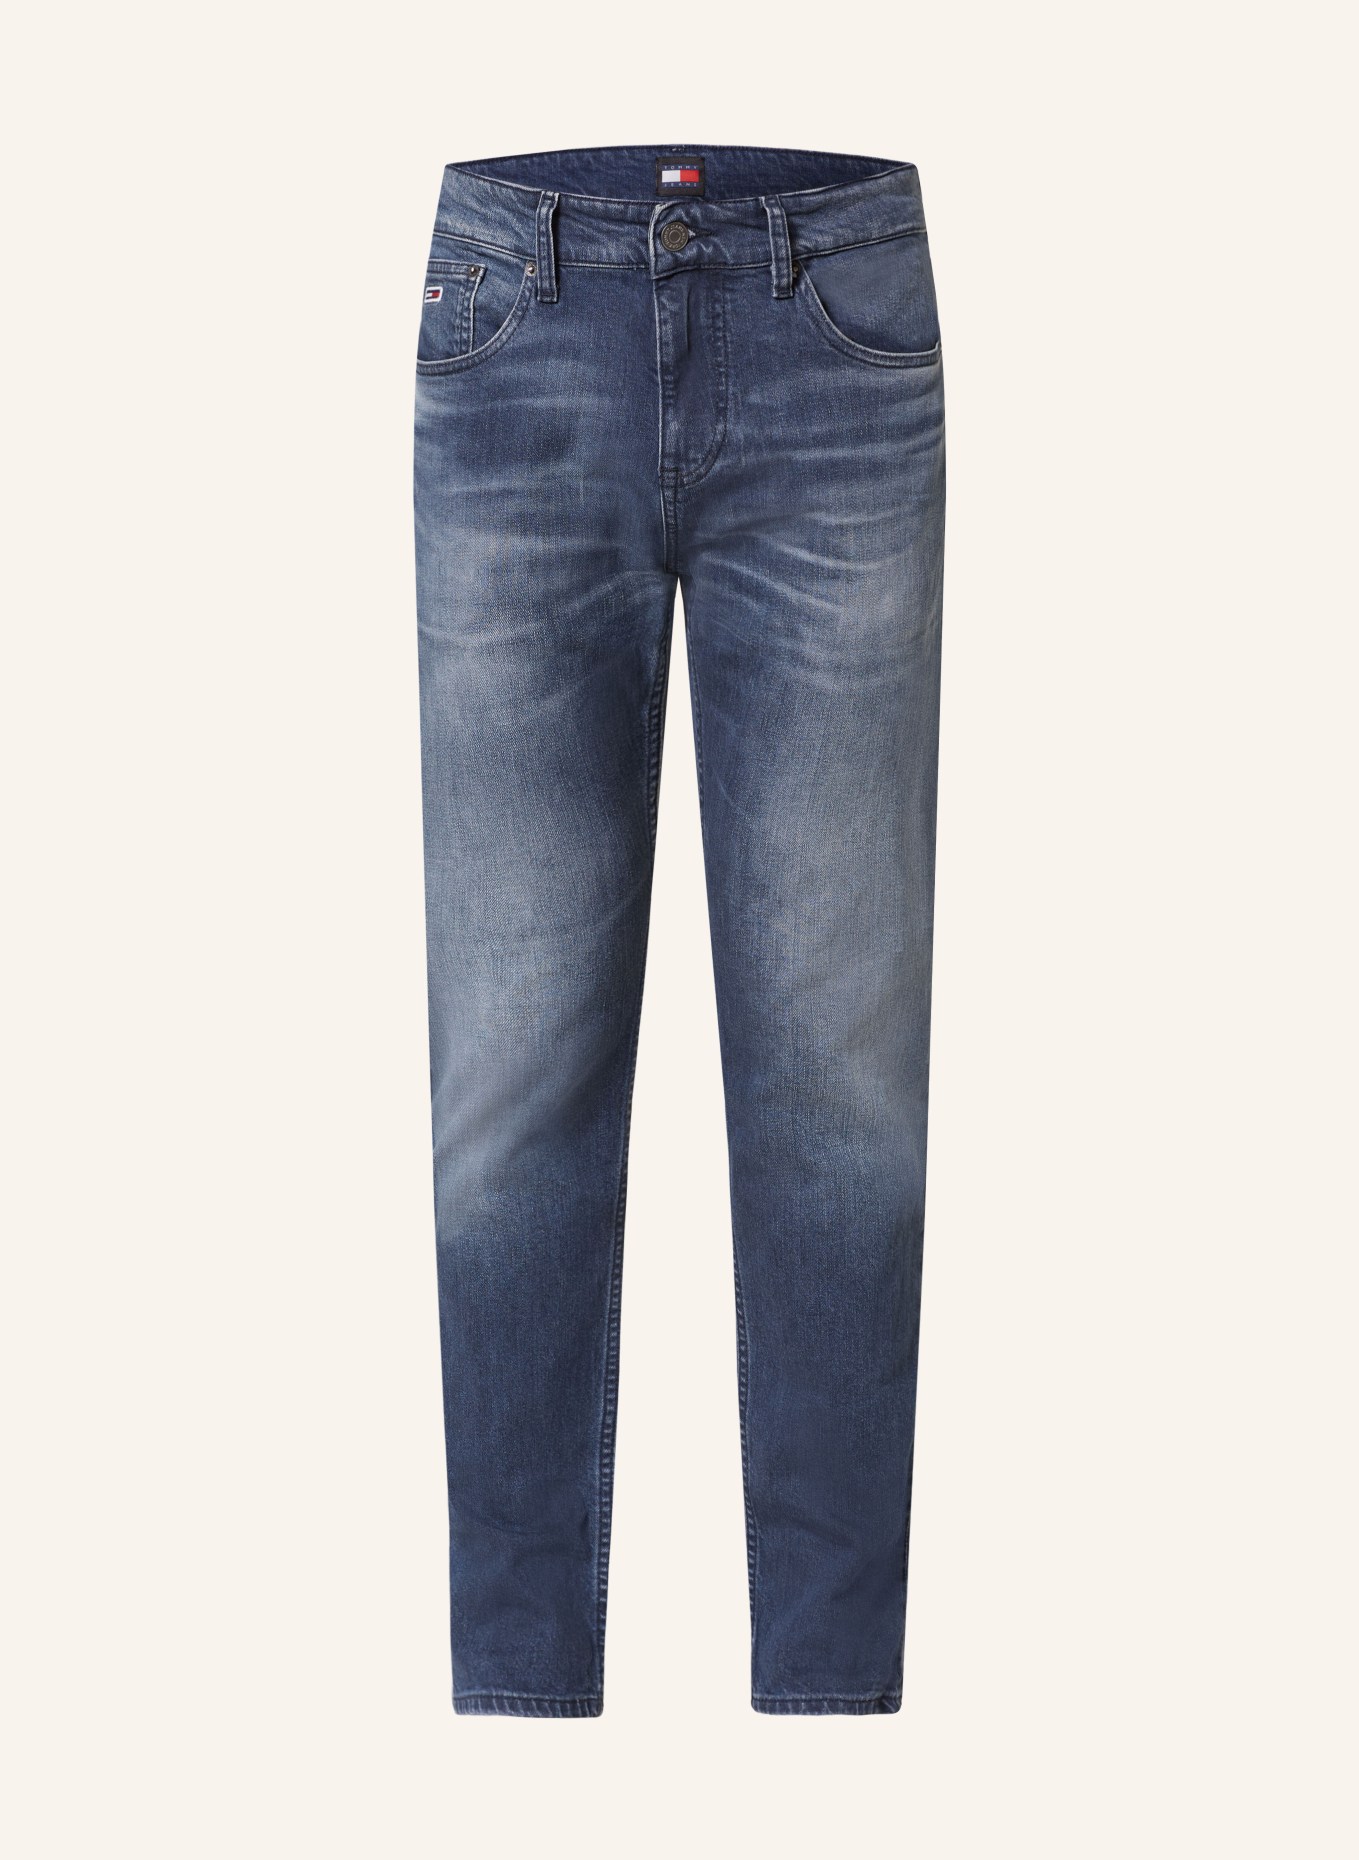 TOMMY JEANS Jeans AUSTIN Slim Tapered Fit, Farbe: 1BK Denim Dark (Bild 1)